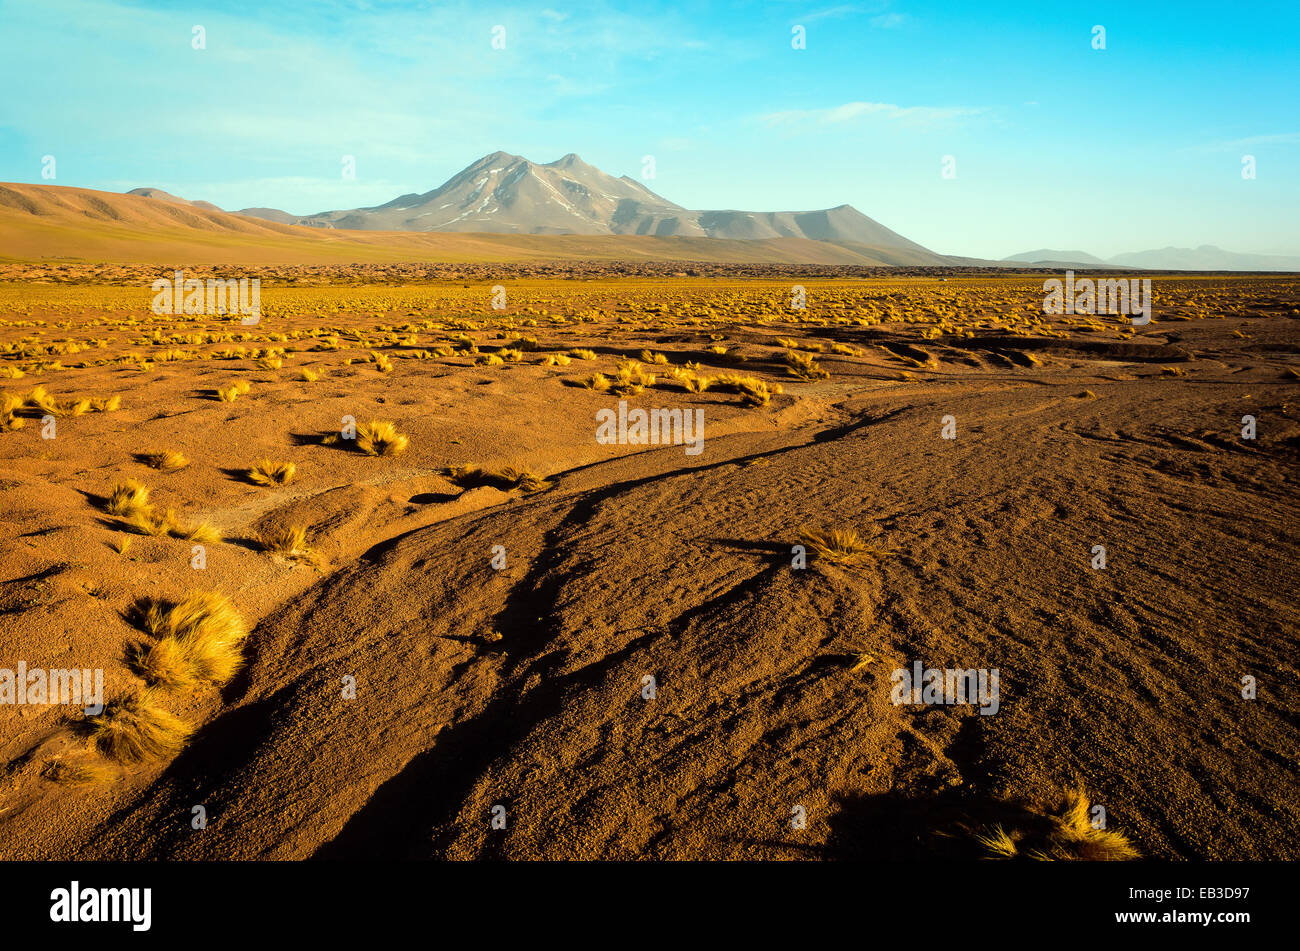 Chile, Atacama desert at sunset Stock Photo